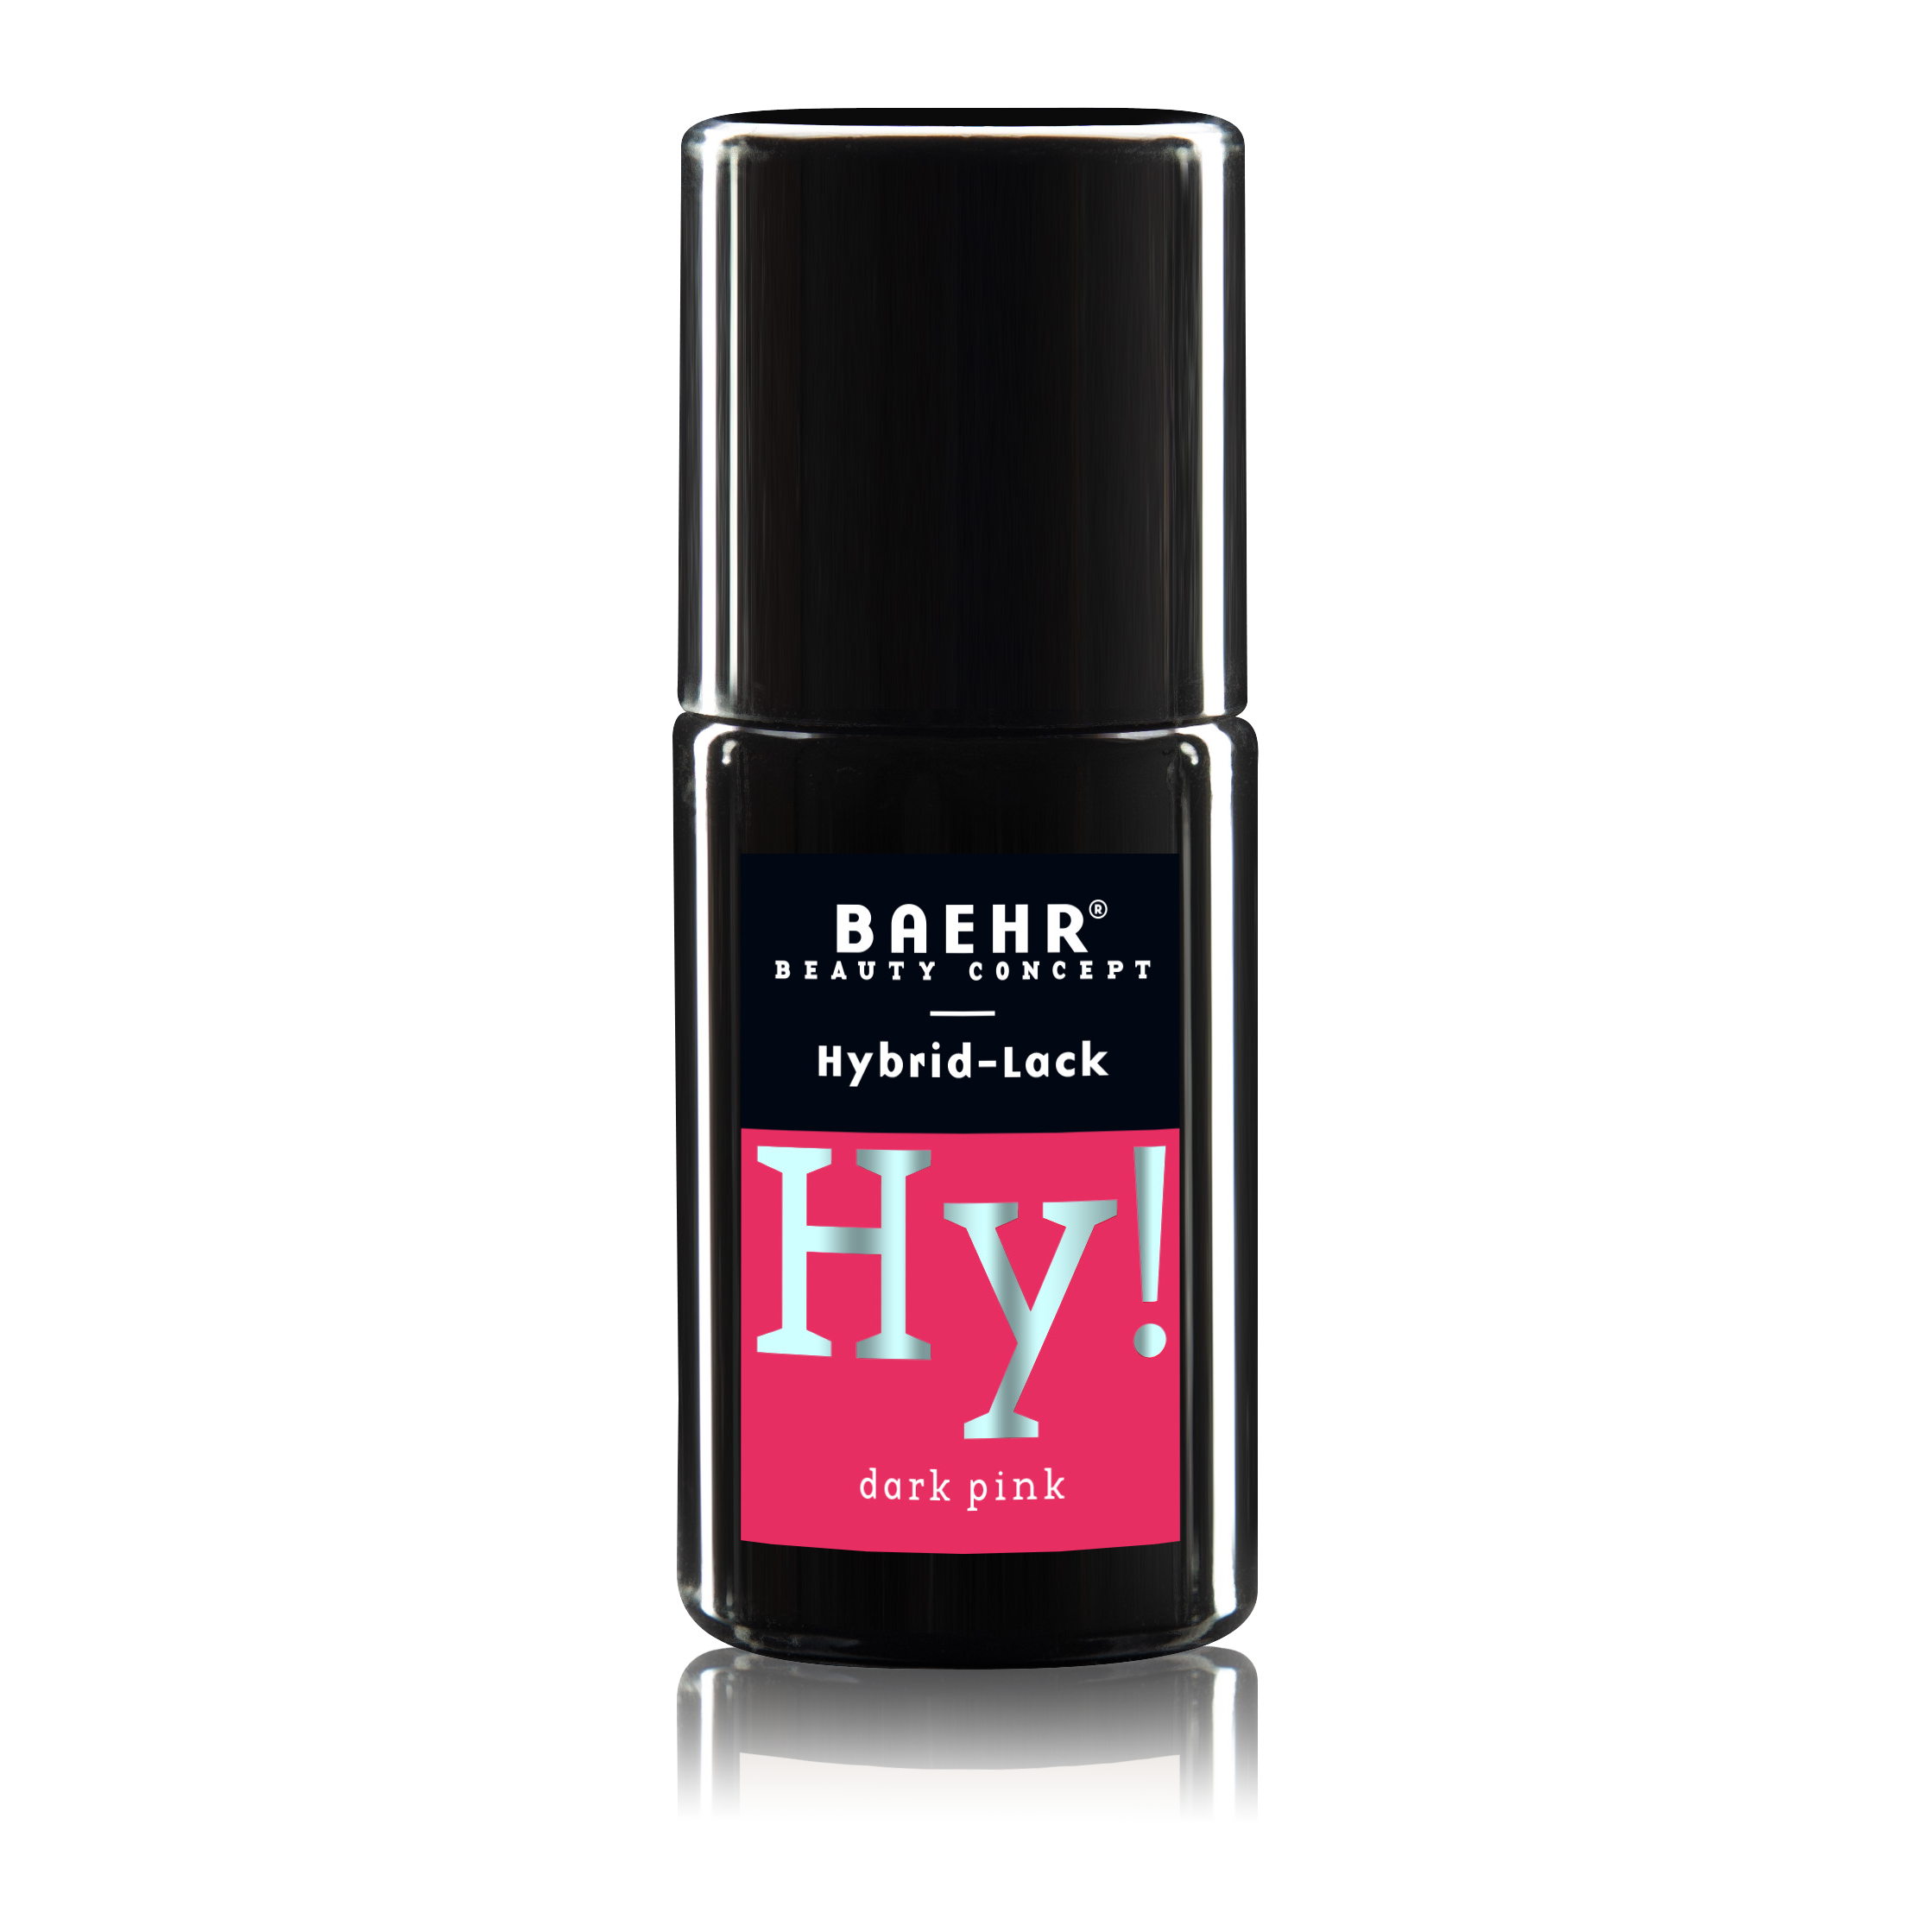 hy-hybrid-lack--dark-pink_27319